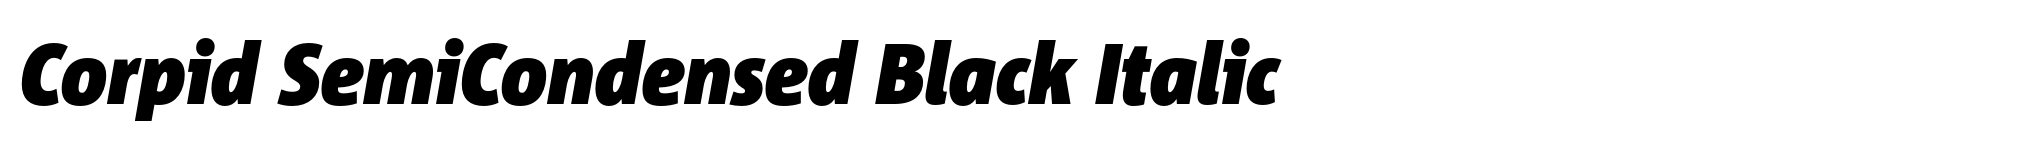 Corpid SemiCondensed Black Italic image